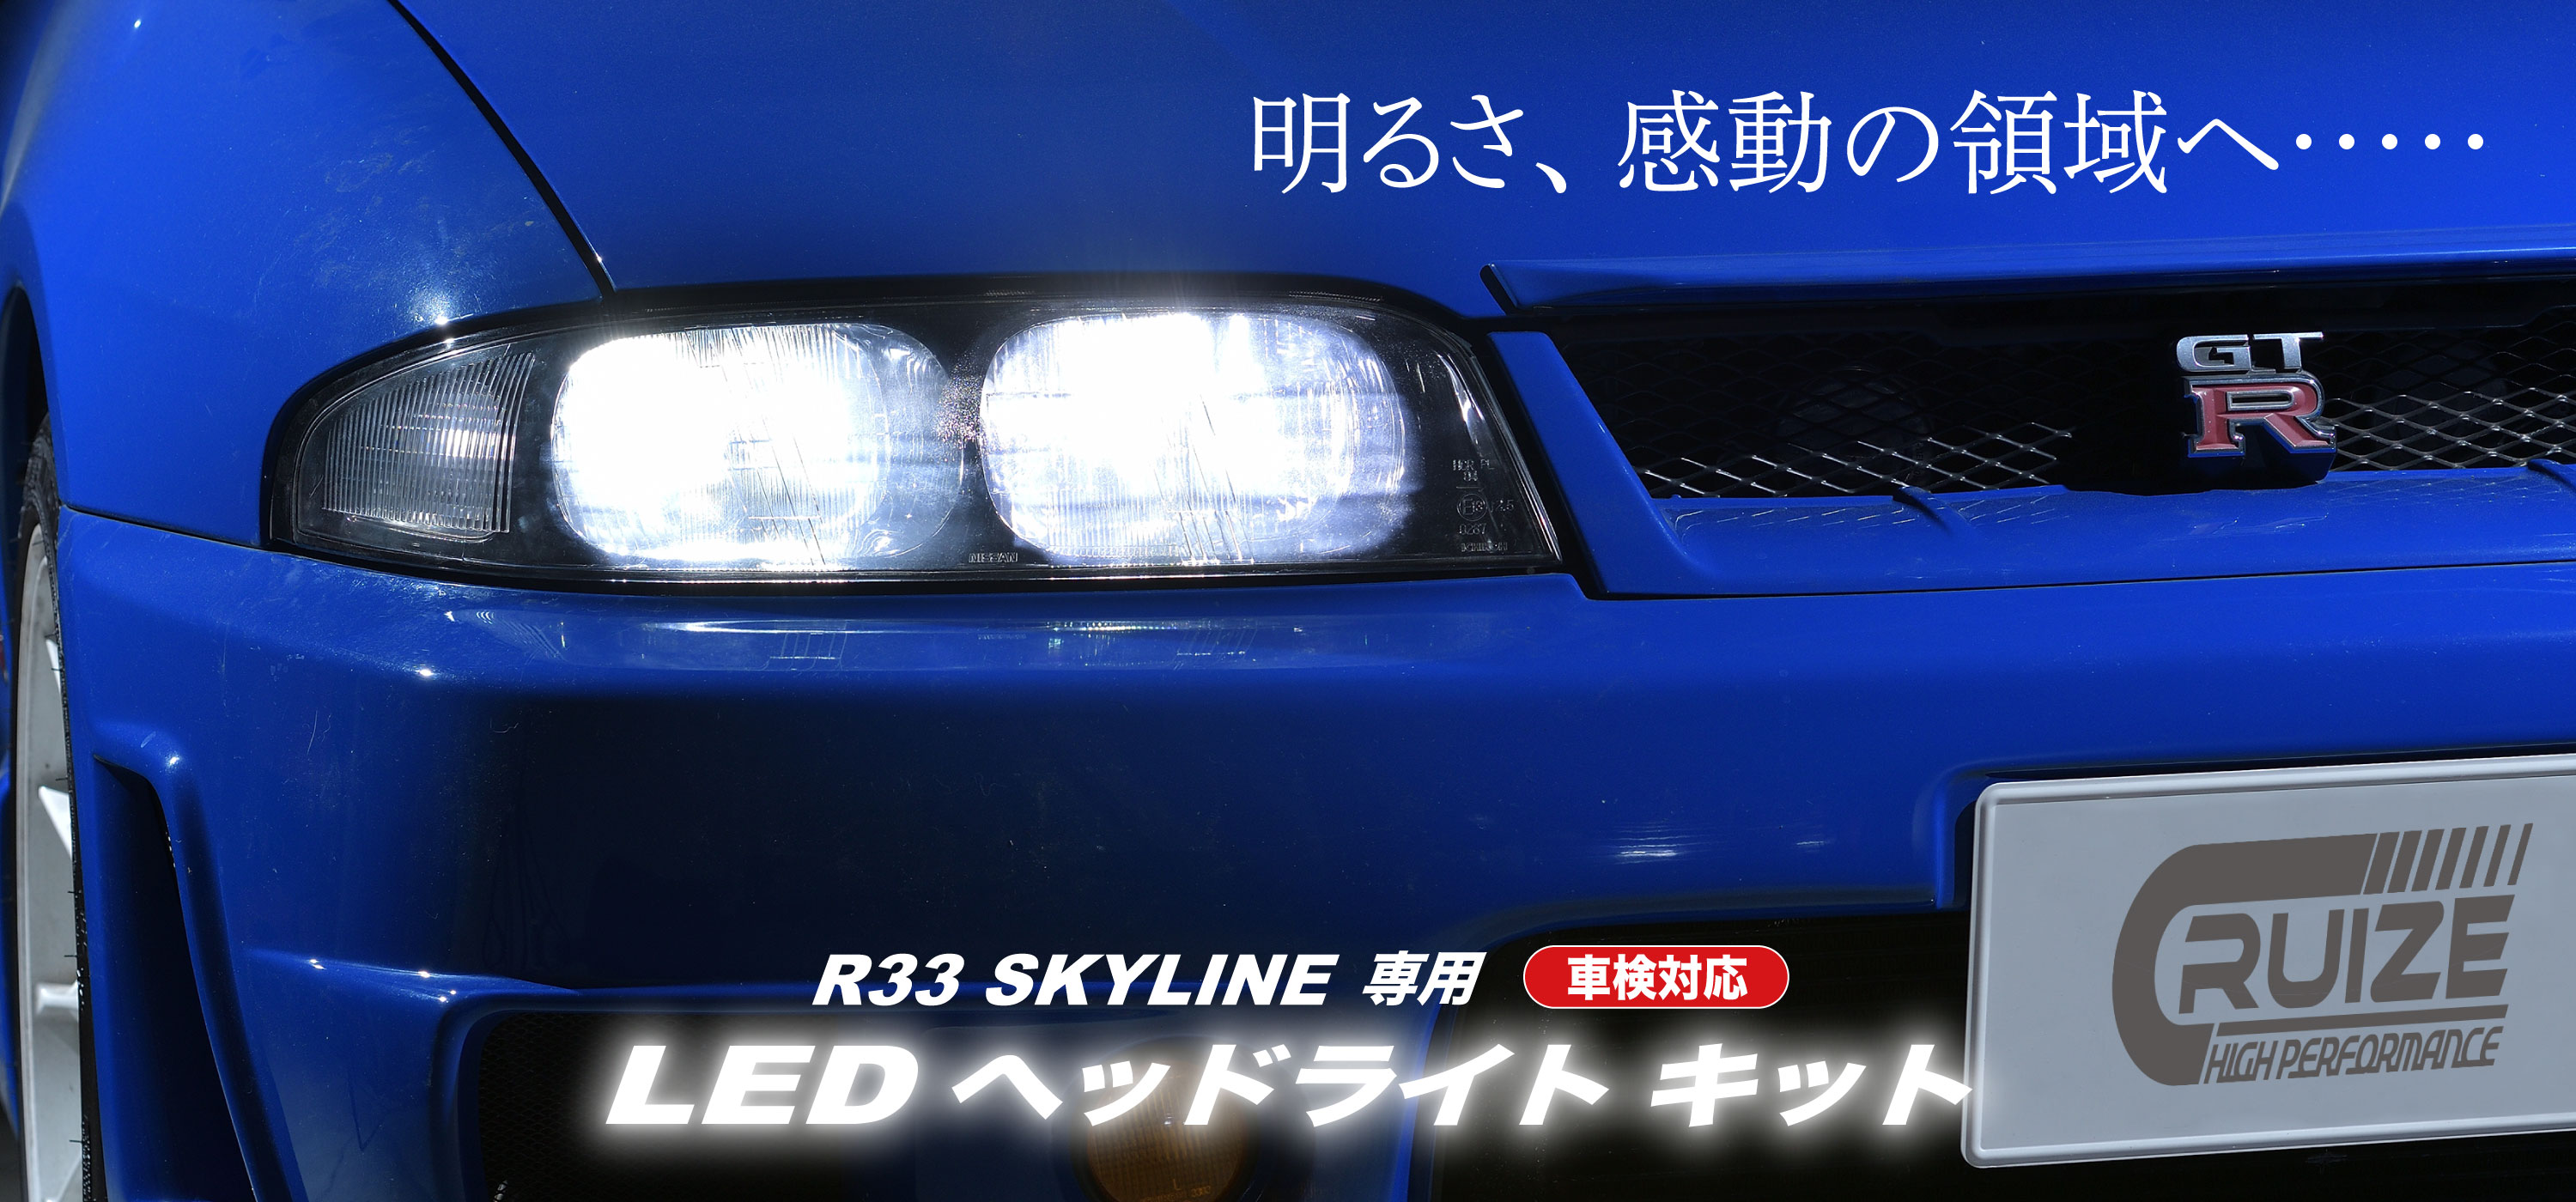 R33 LED Headlight